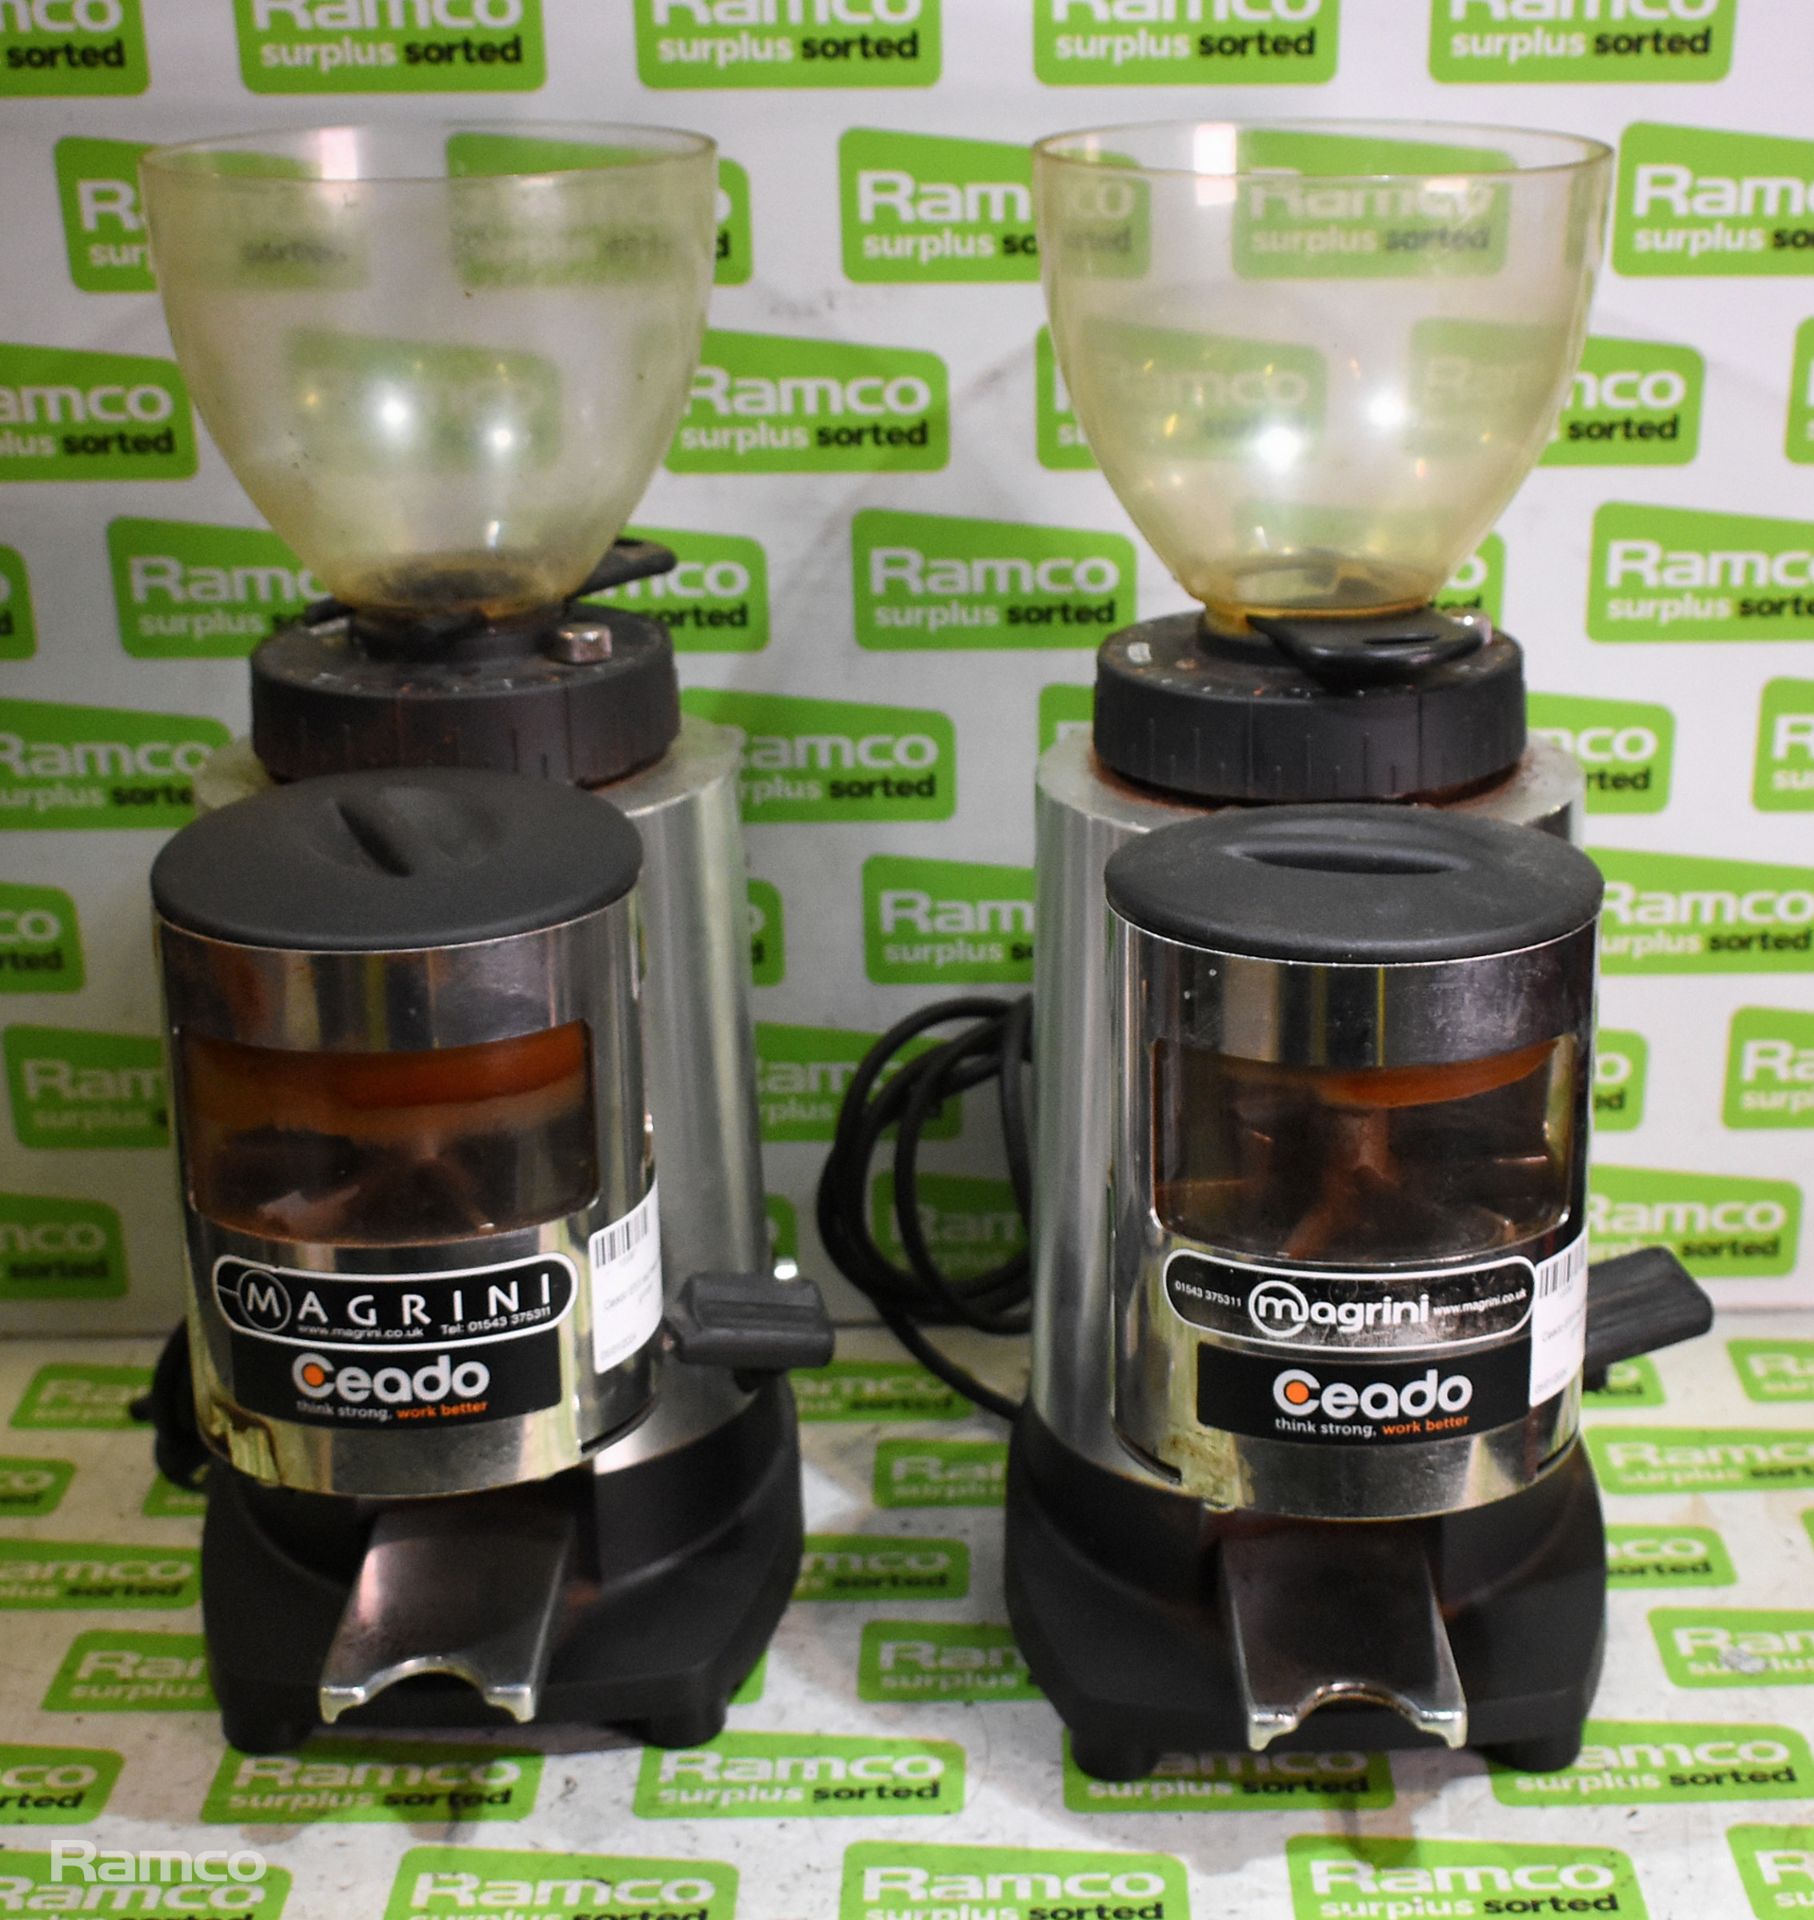 2x Ceado E6X espresso coffee grinders